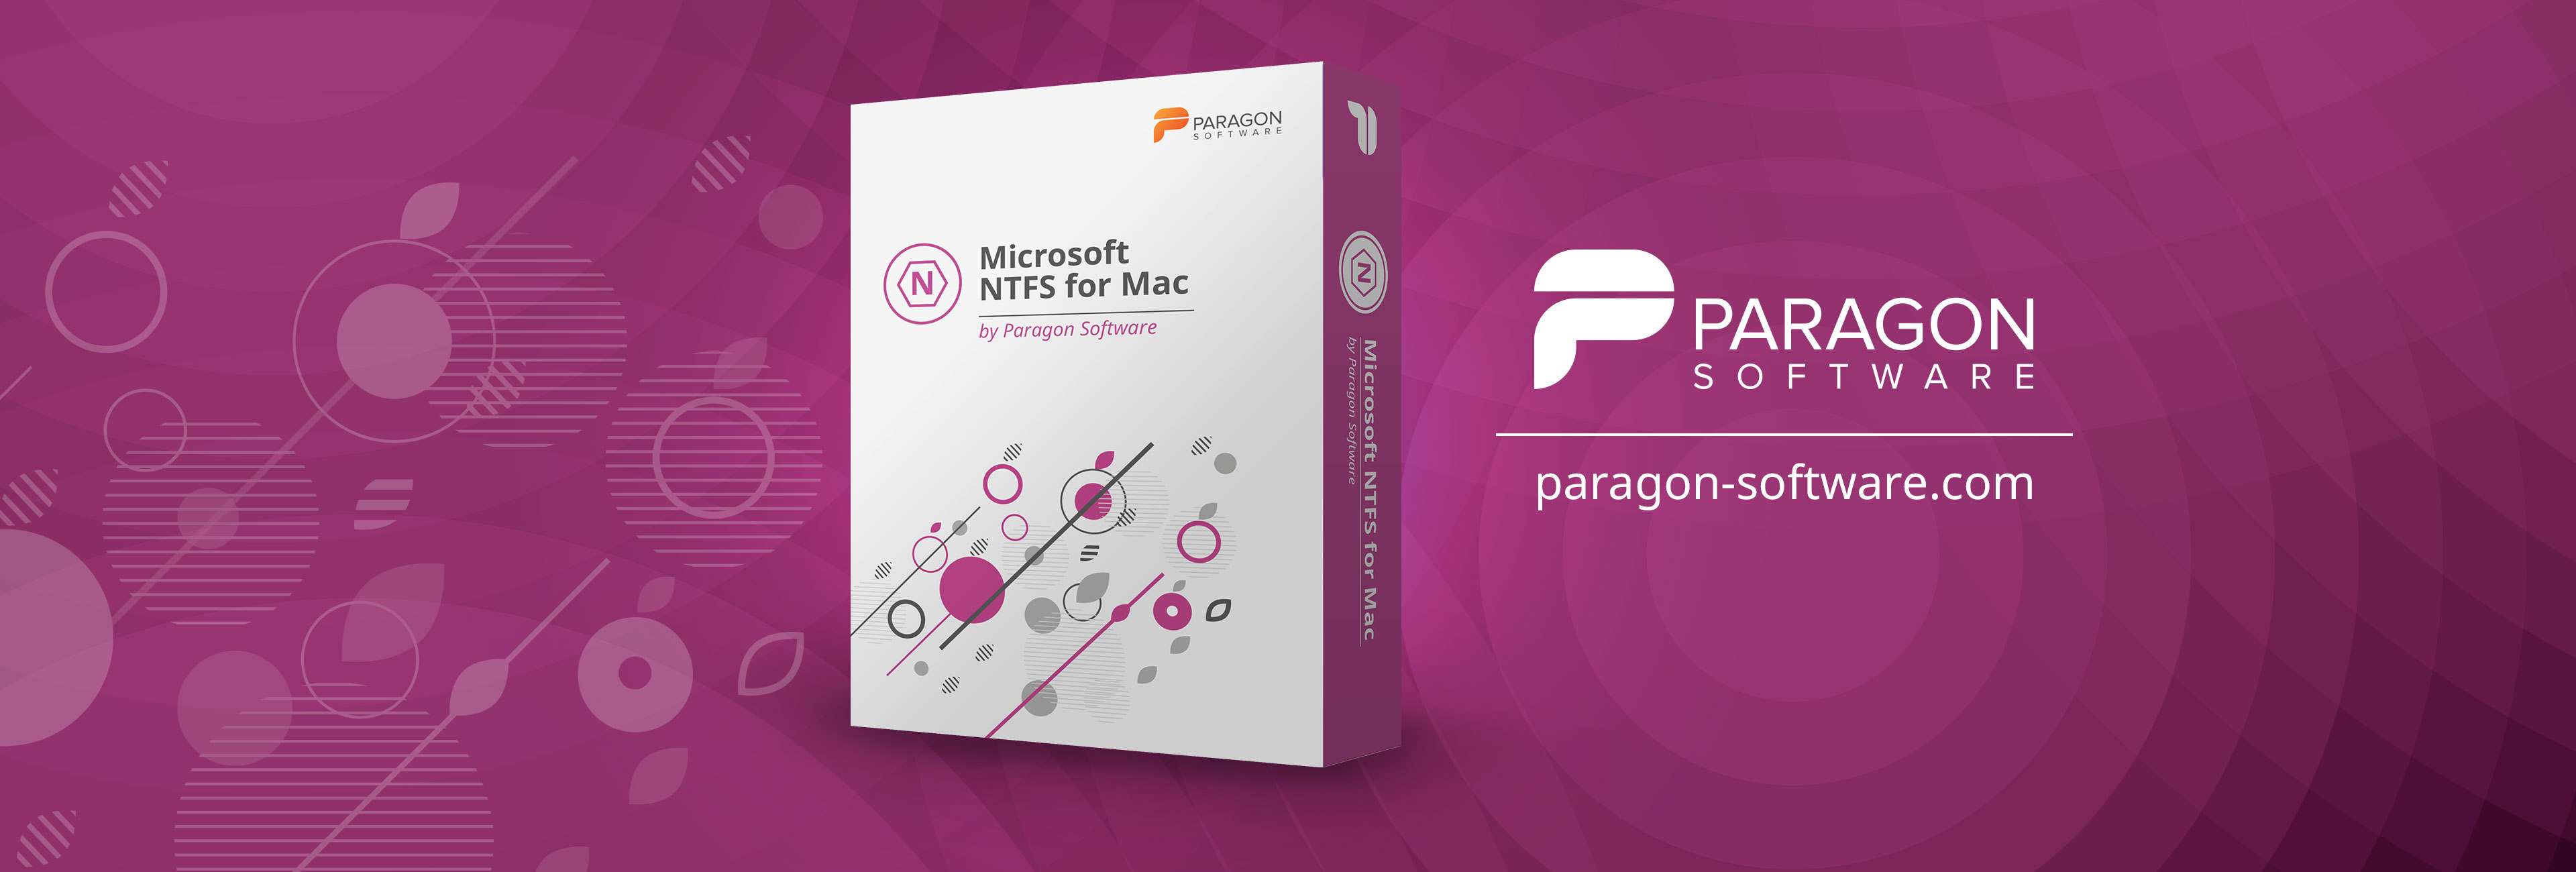 paragon ntfs for mac